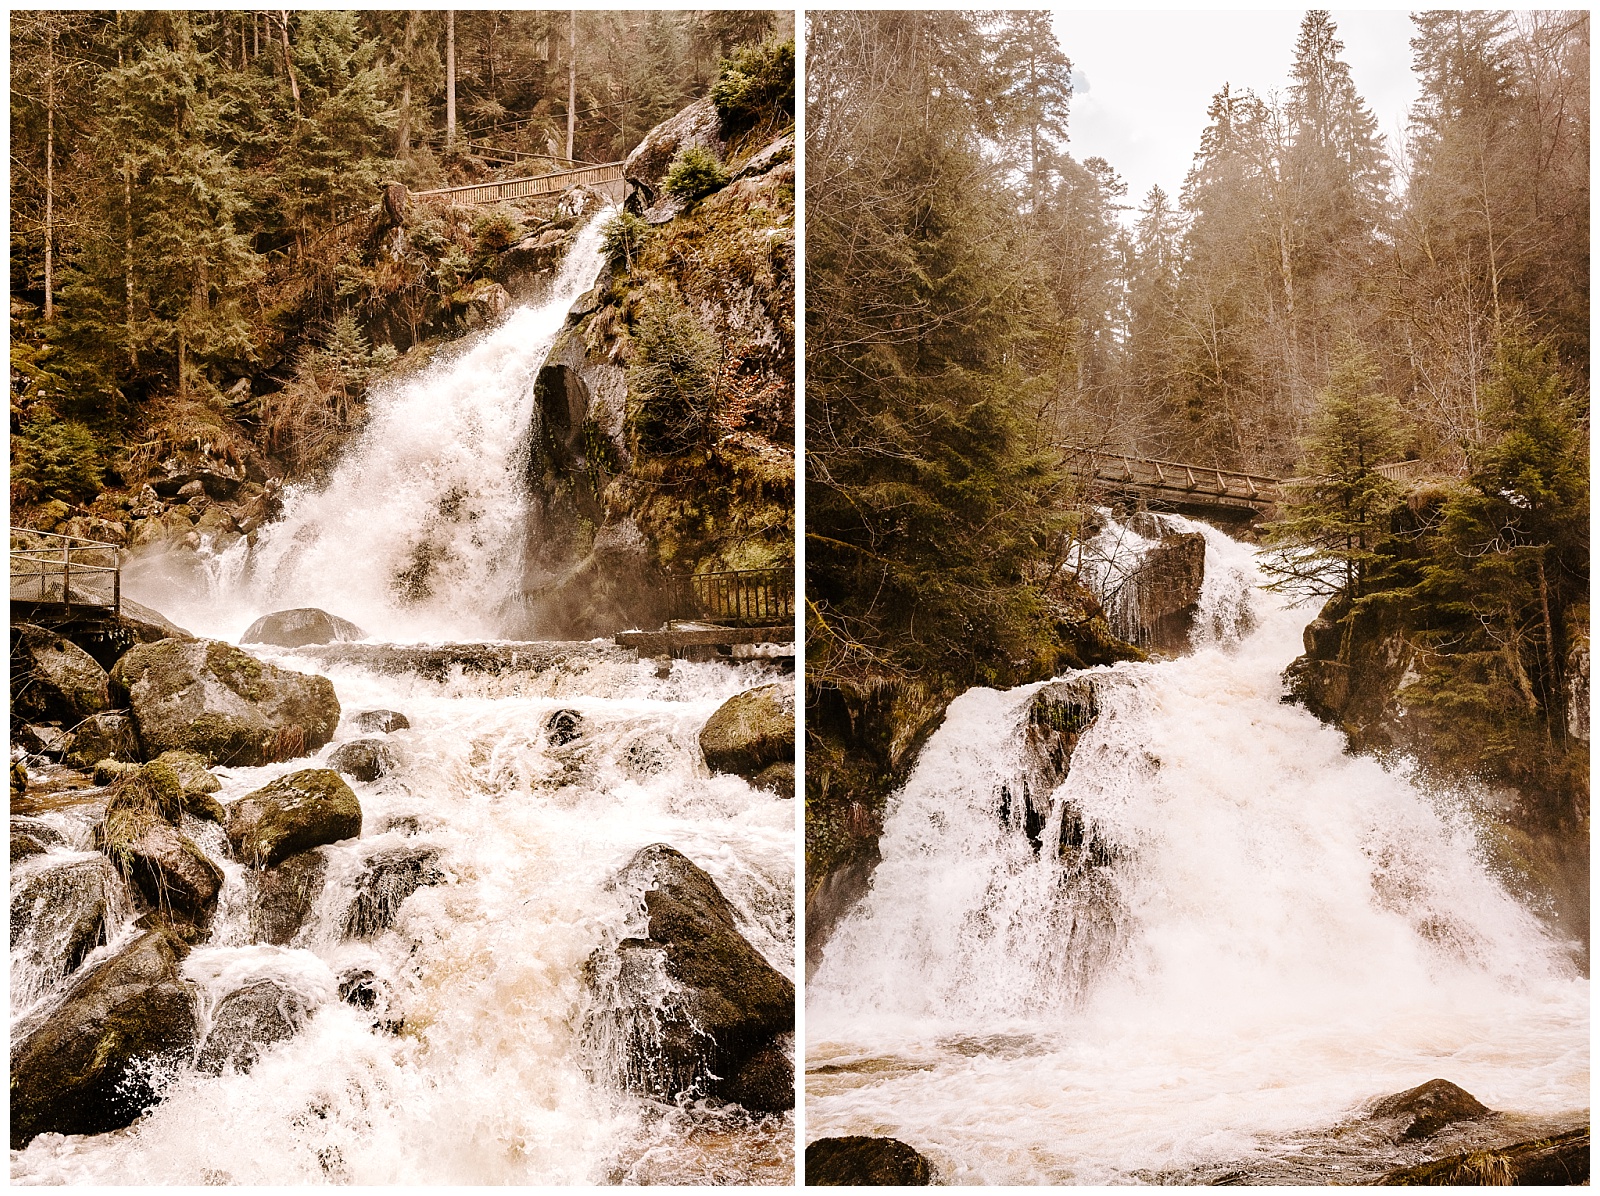 Triberg Waterfall in Germany